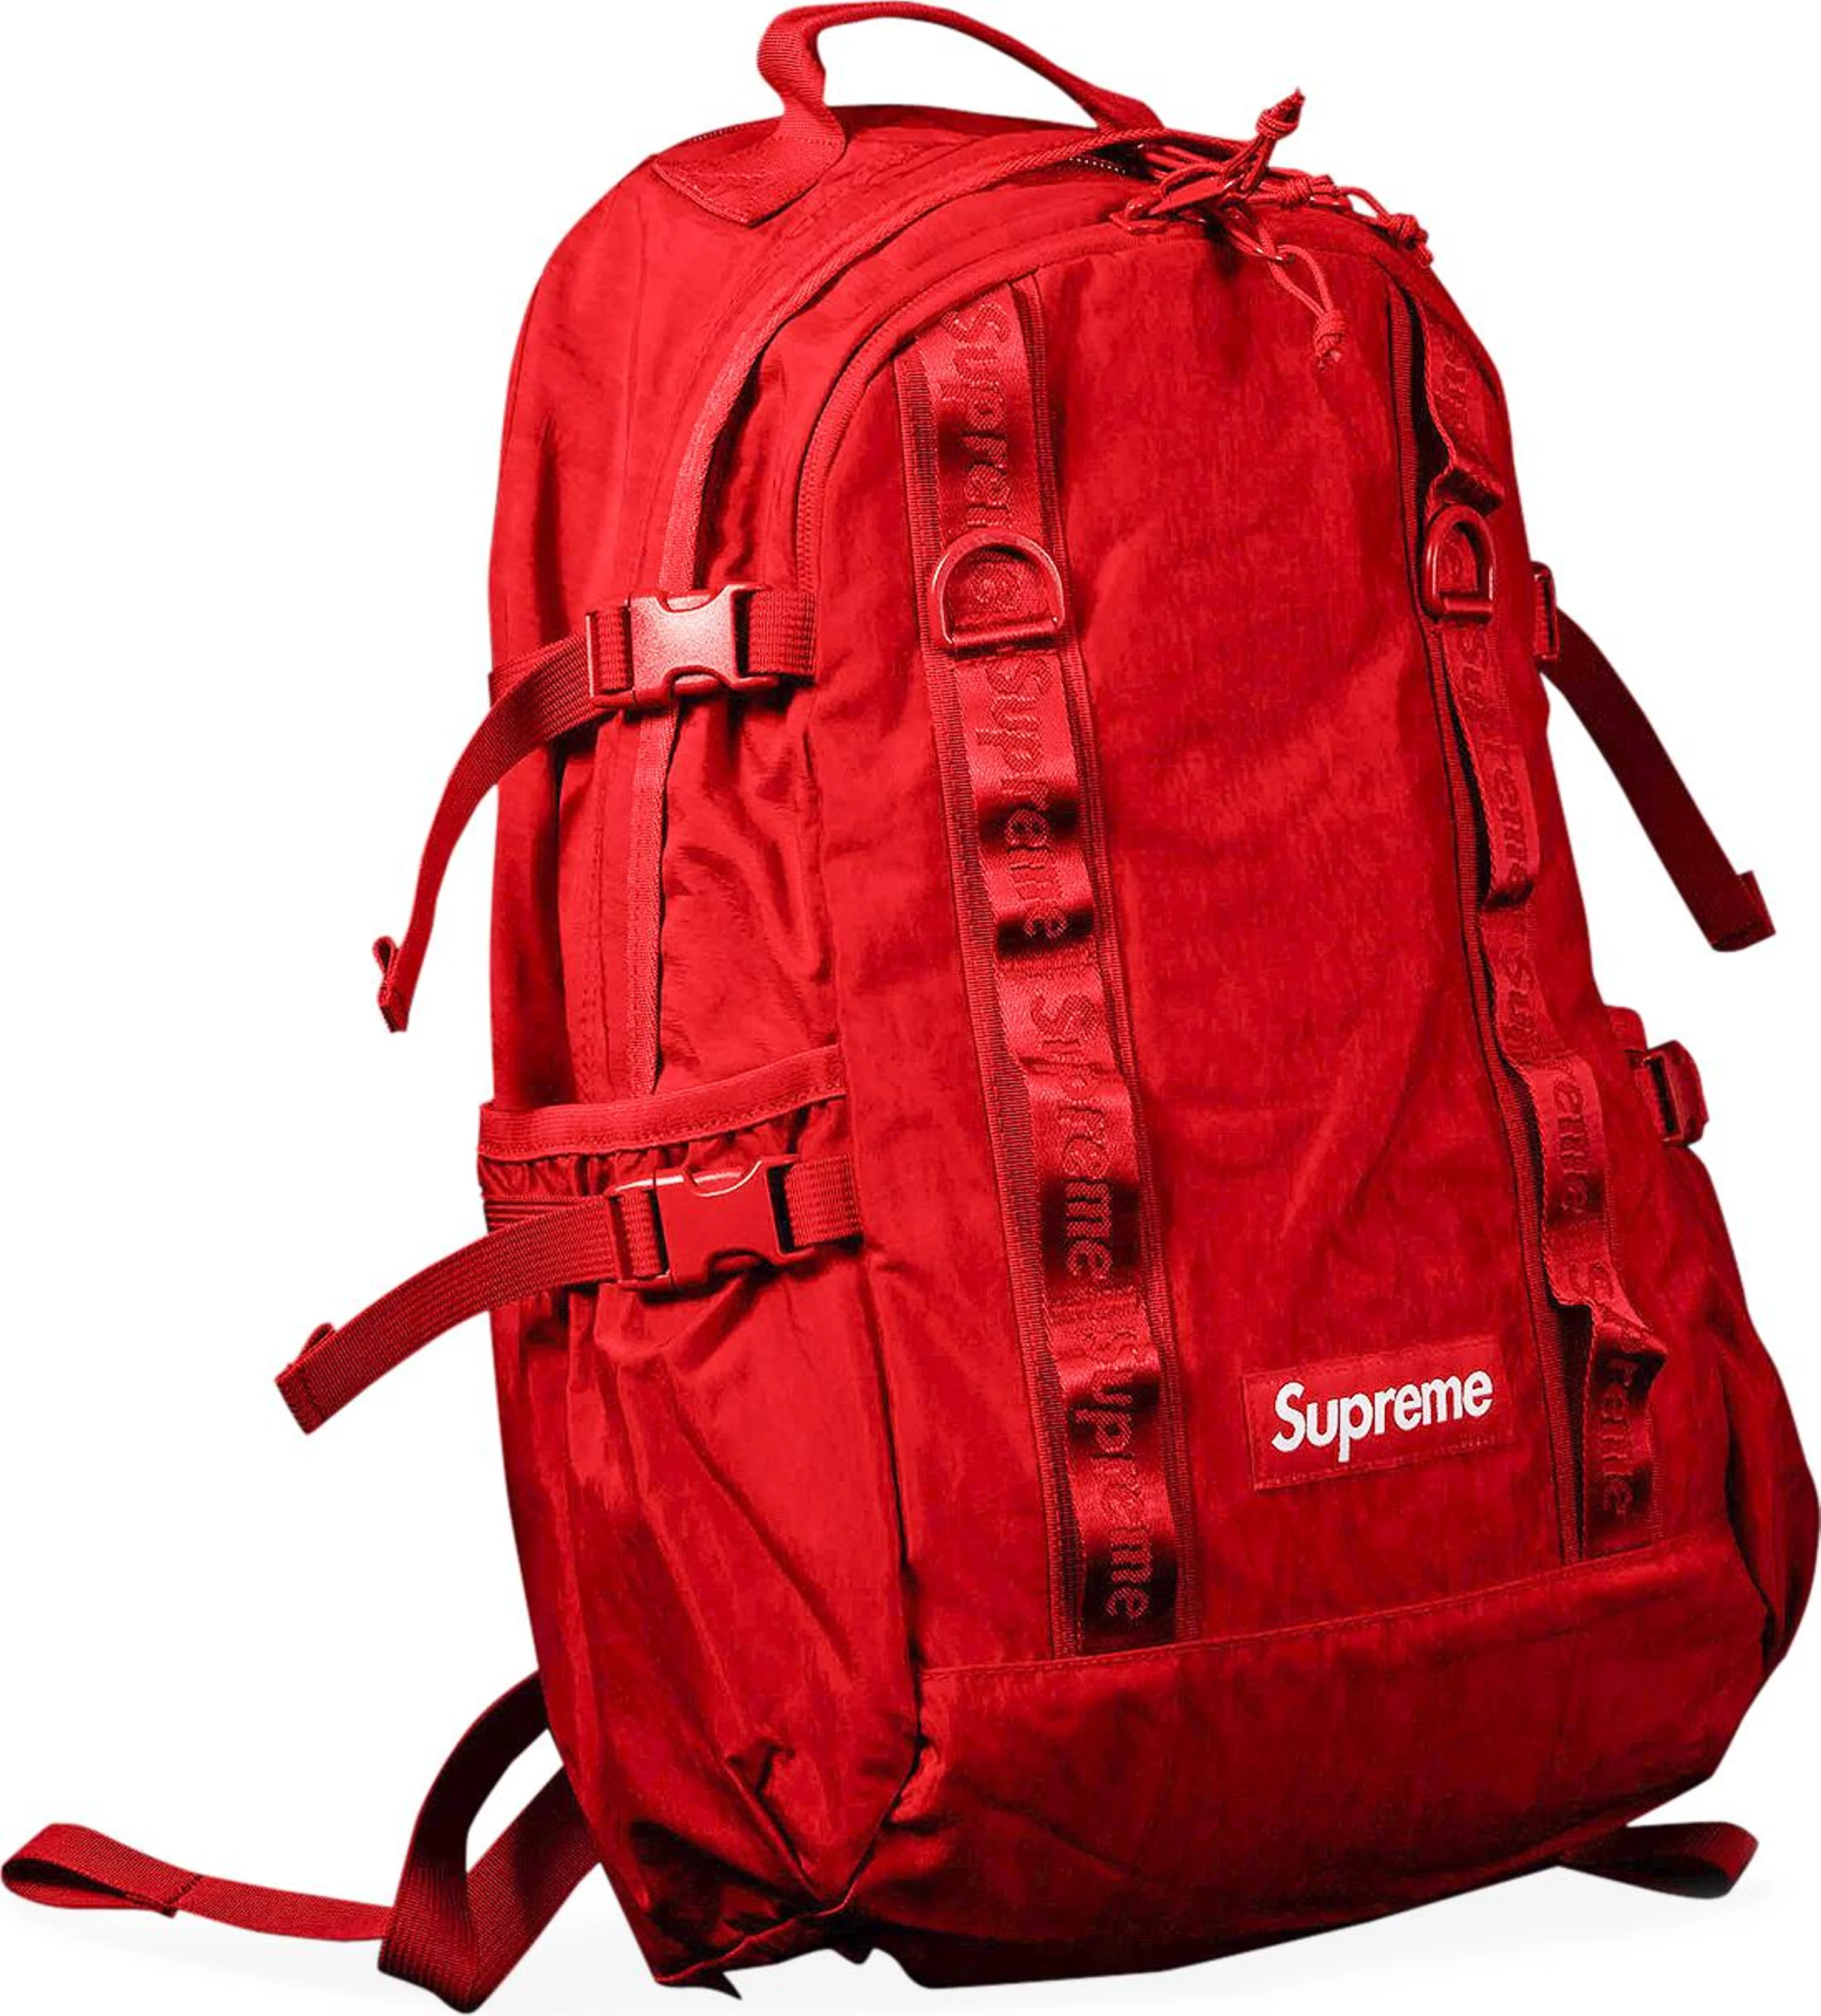 Supreme Best Backpacks to Buy